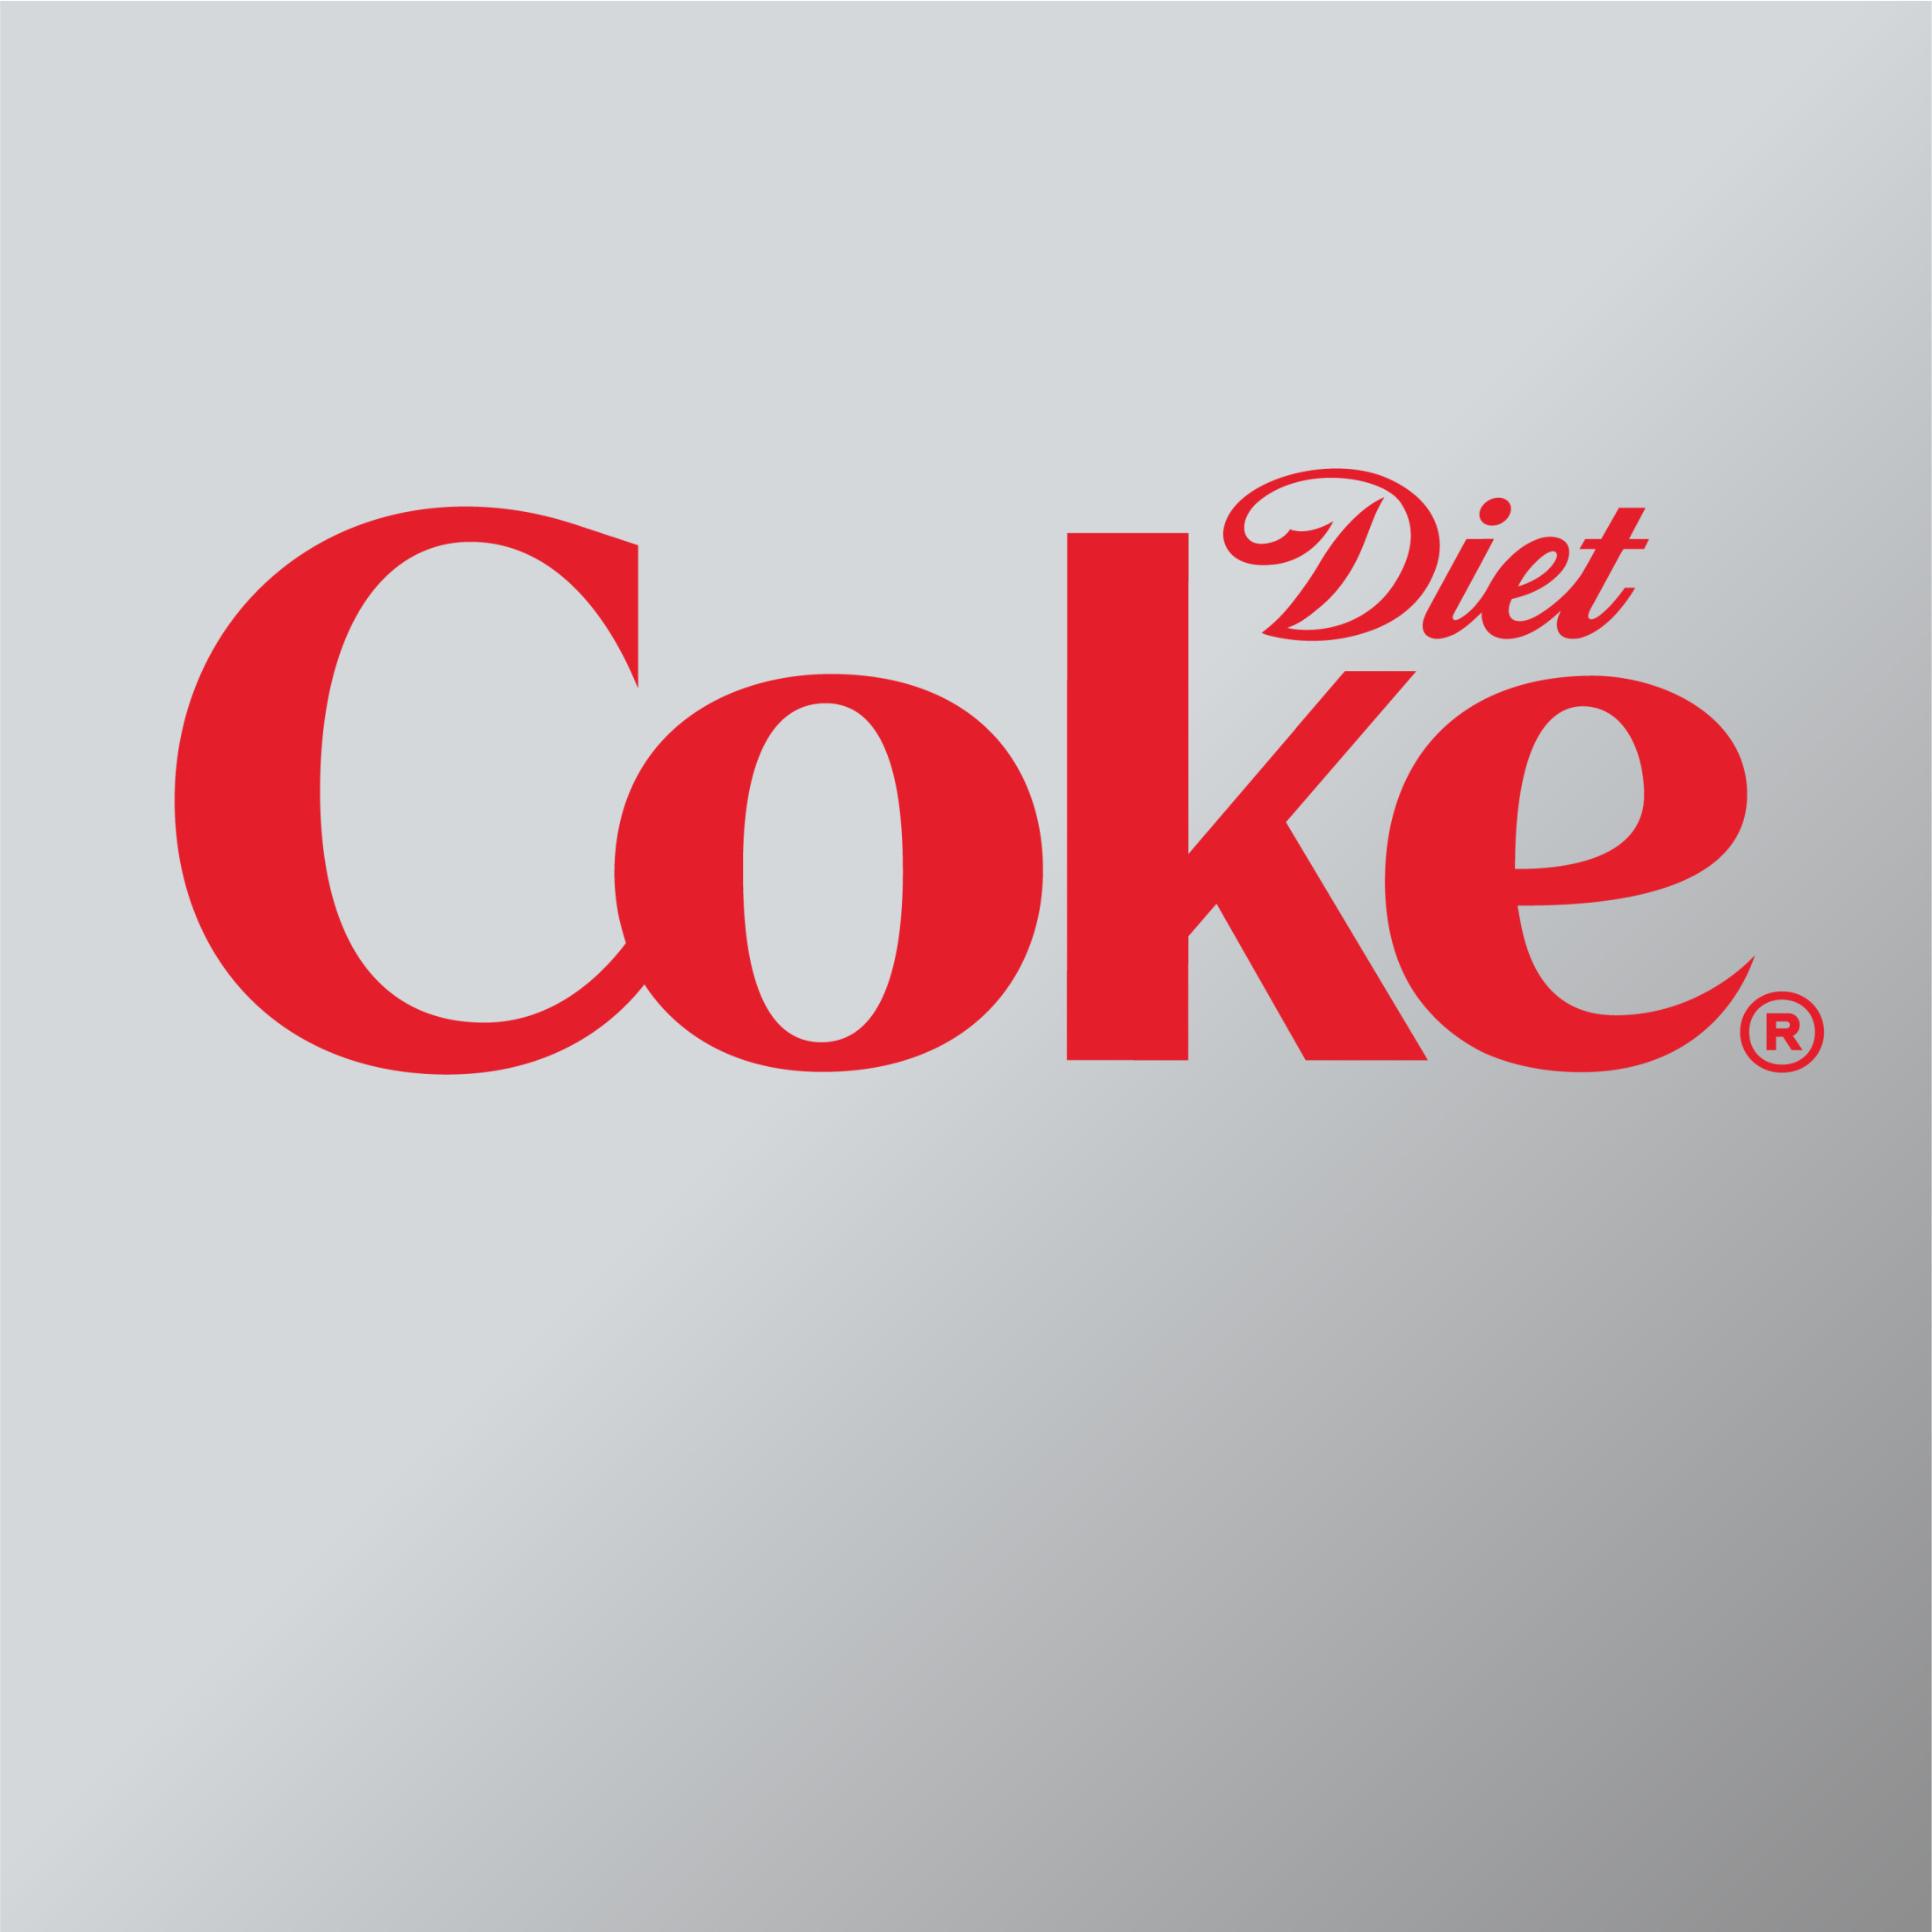 Diet Coke Diet Cola Soda Pop, 8 fl oz Glass Bottles, 6 Pack - image 2 of 9